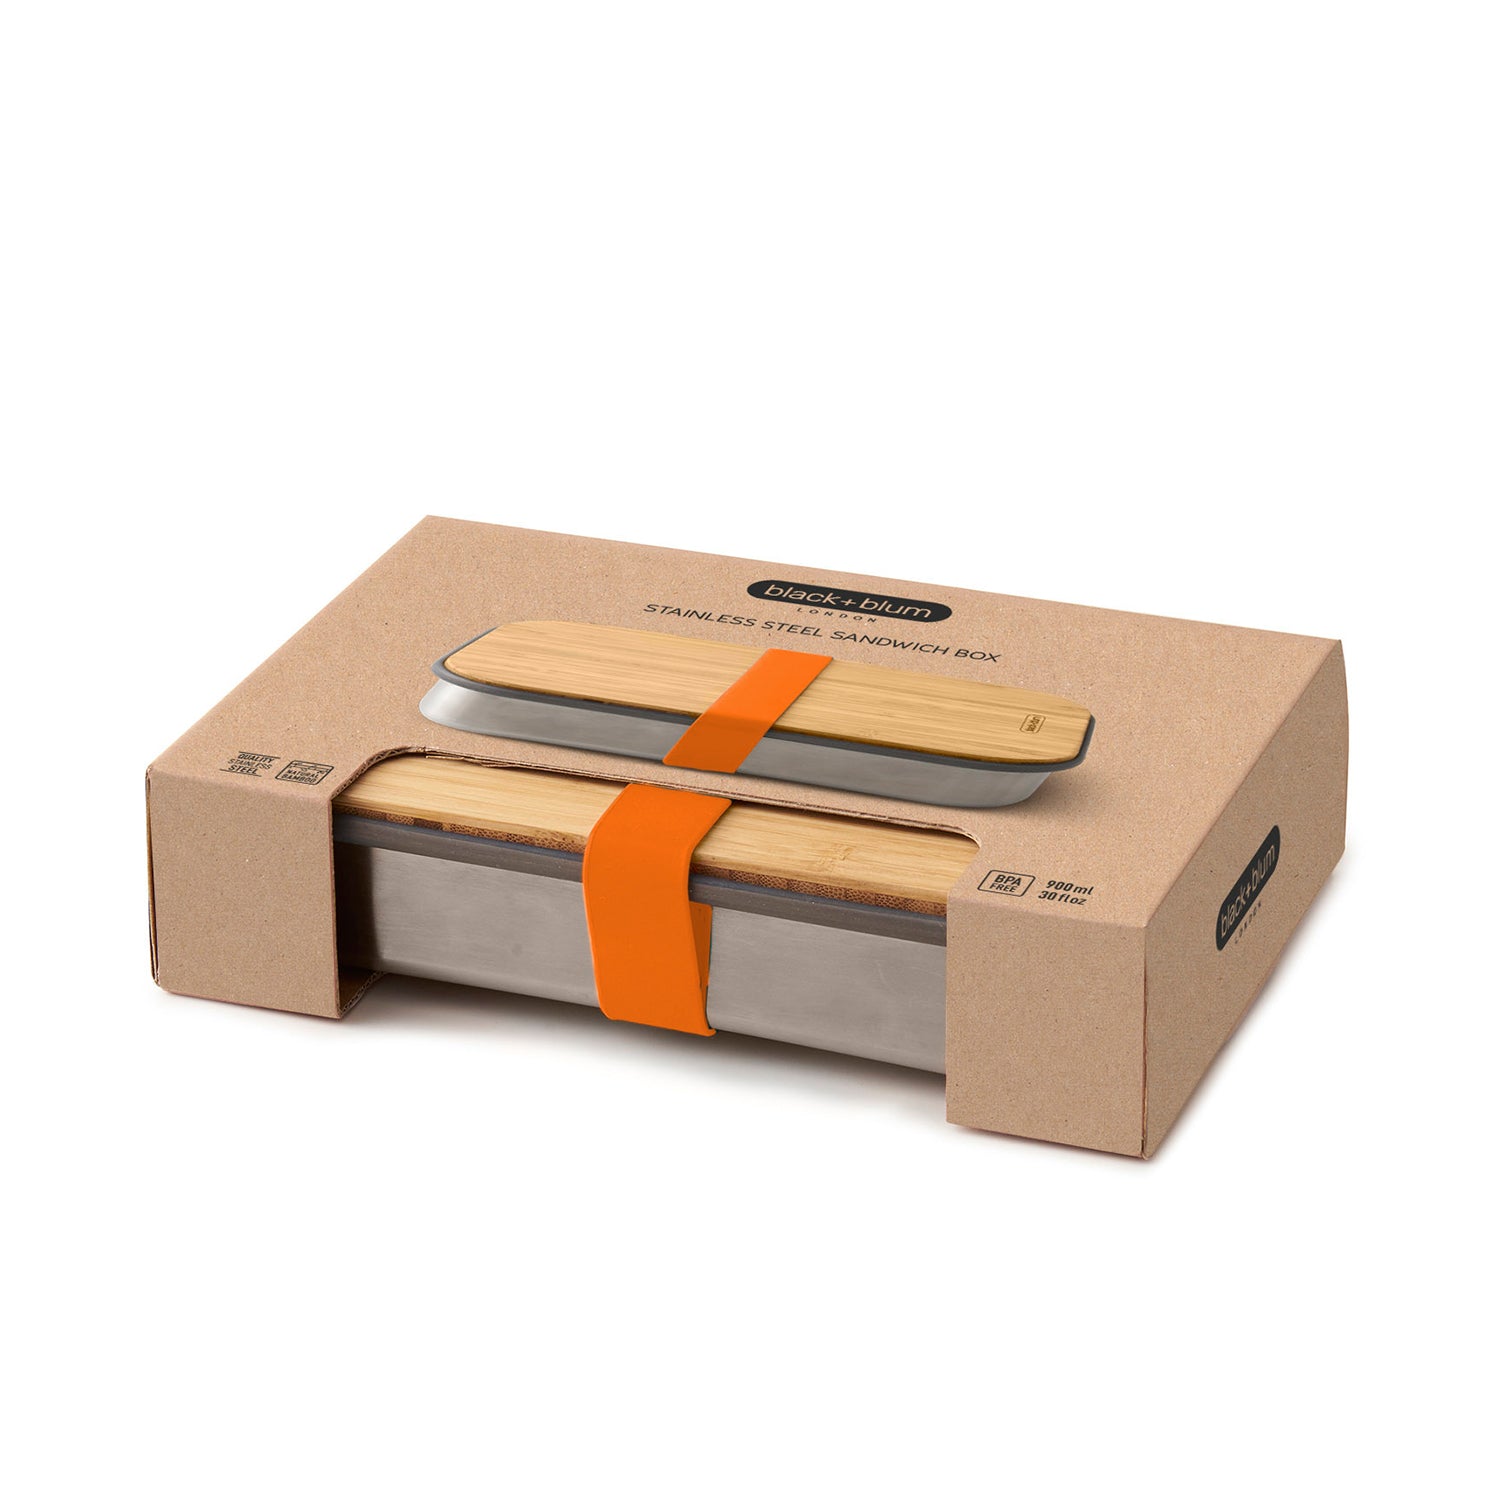 Sandwich on Board orange - box &amp; cutting board